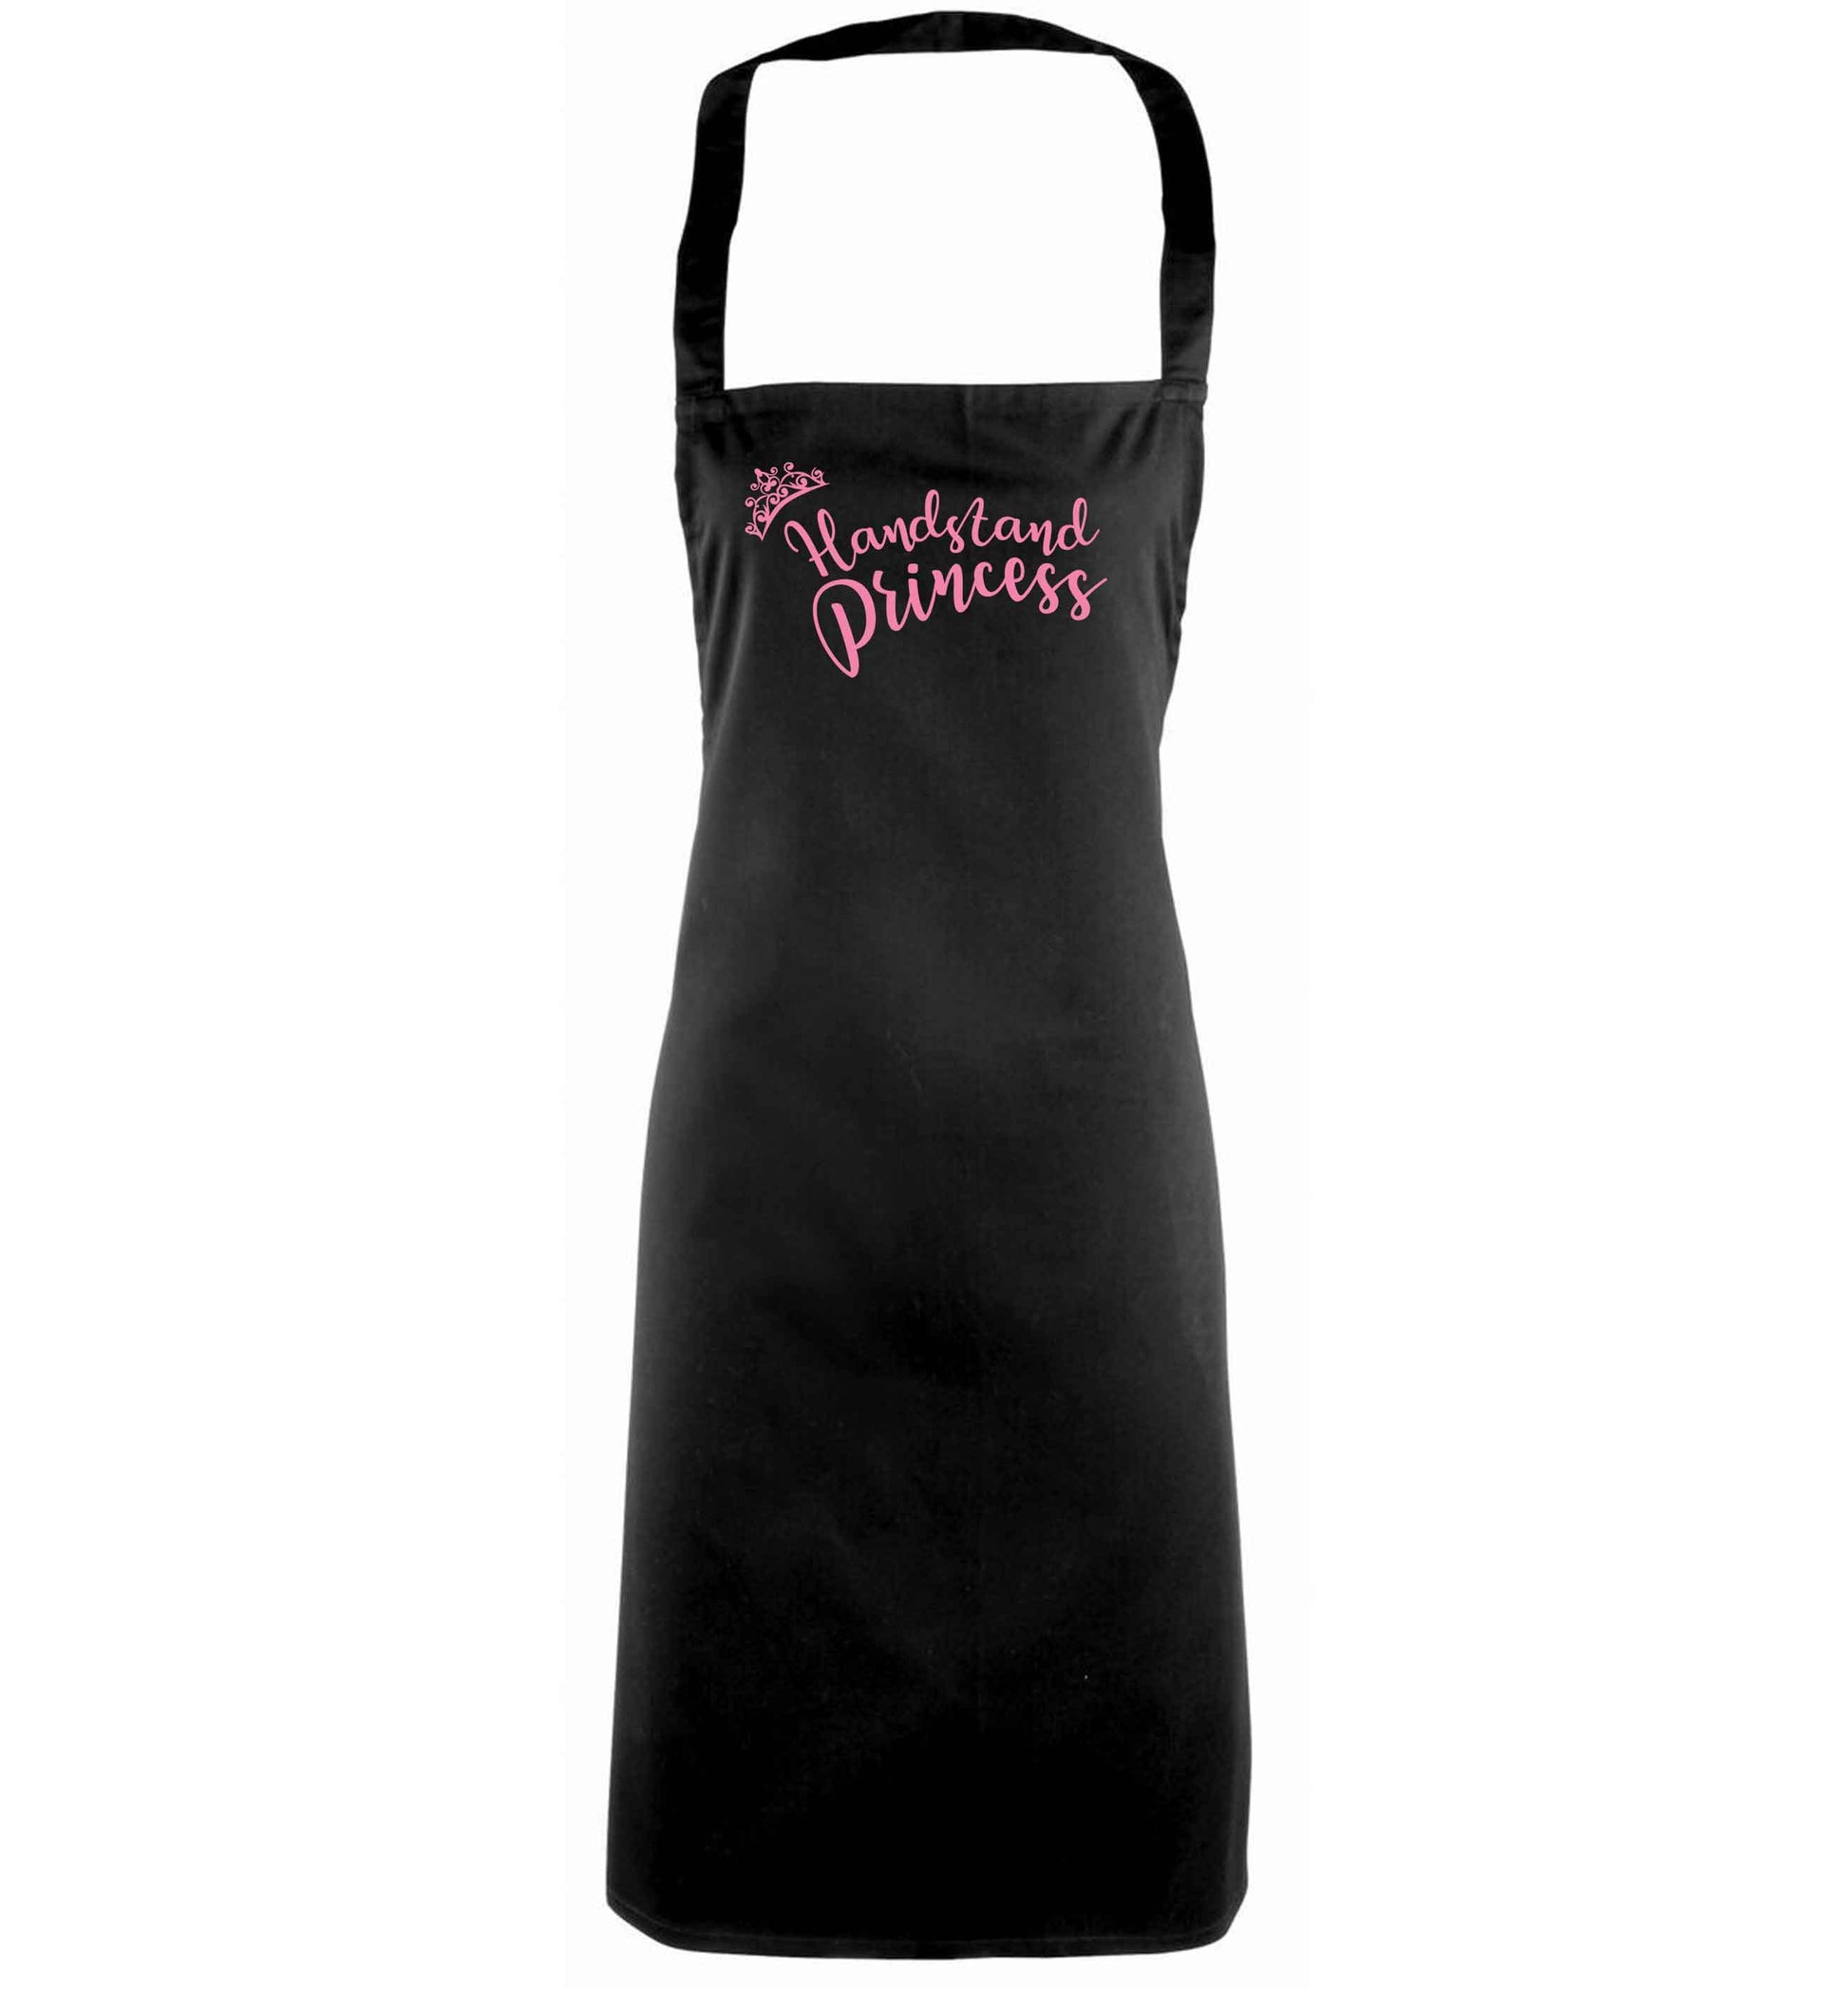 Handstand princess black apron